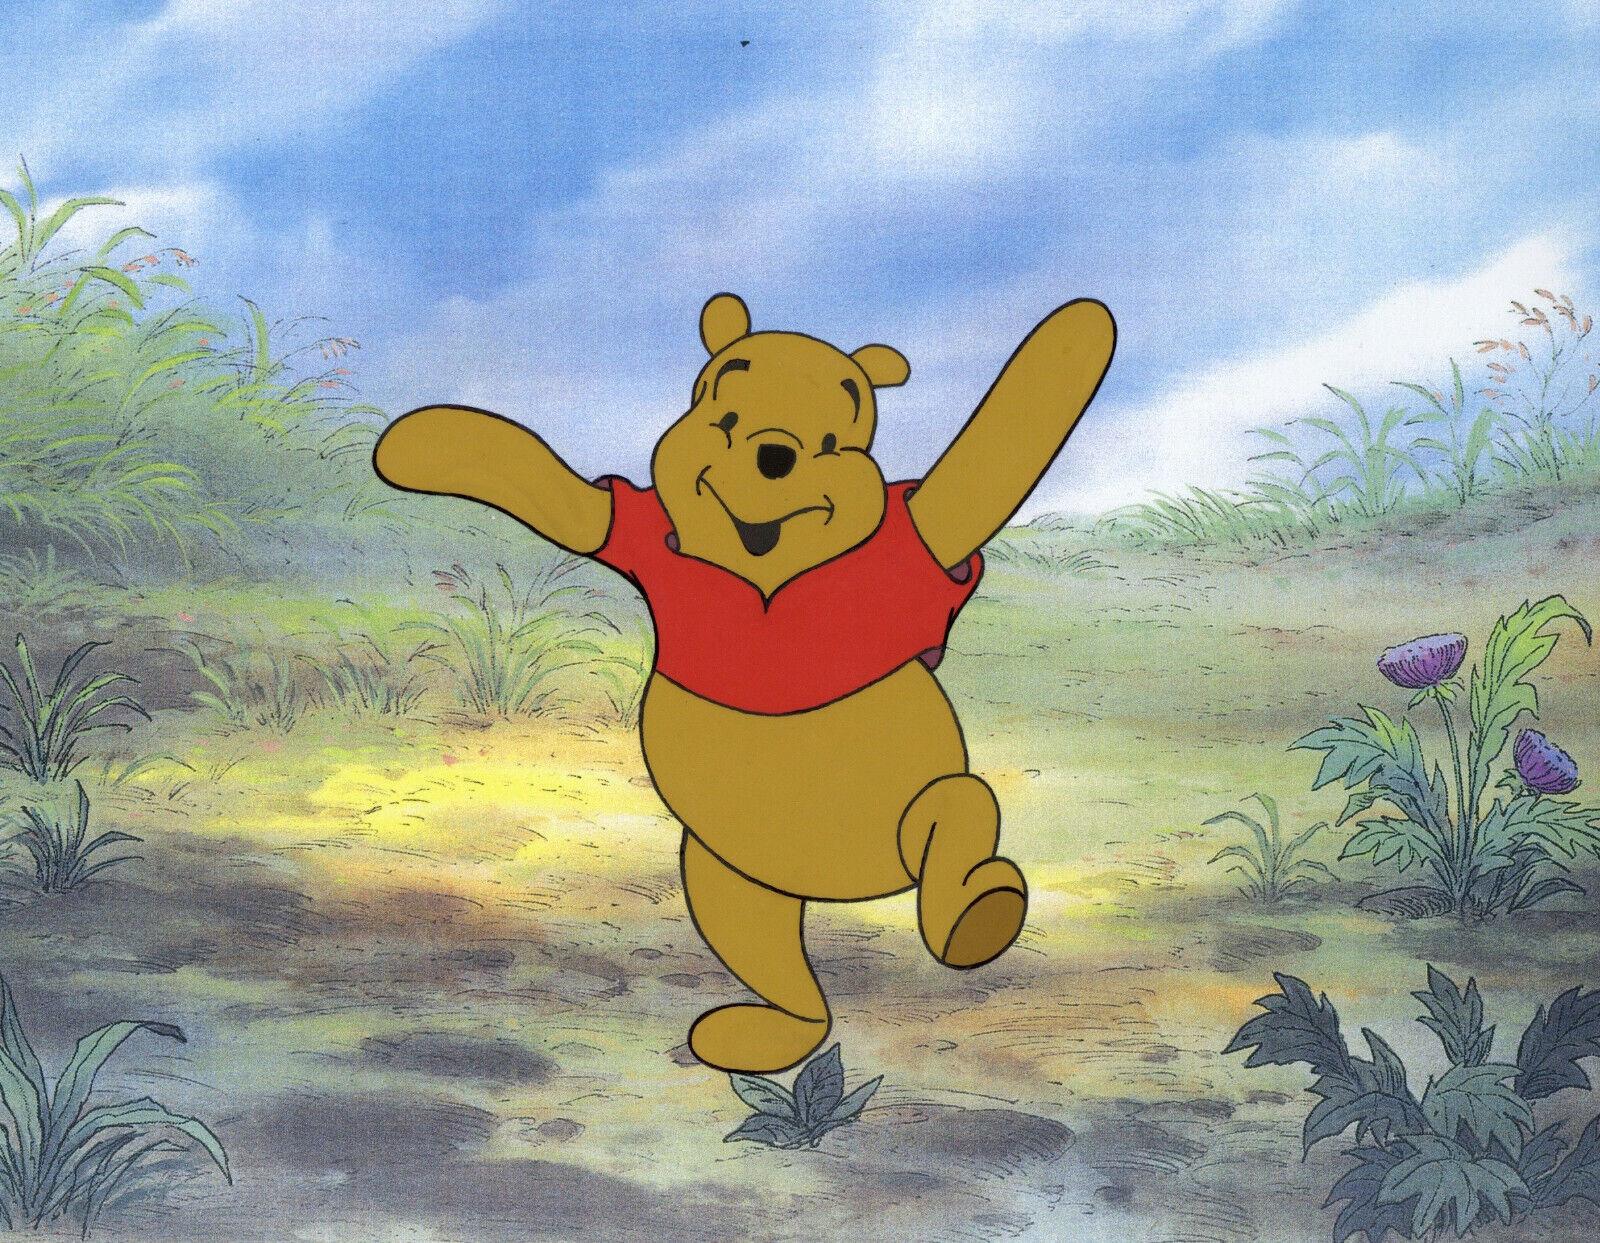 Disney's Winnie the Pooh Original Produktion Cel: Pooh's Happy Stroll – Art von Walt Disney Studio Artists